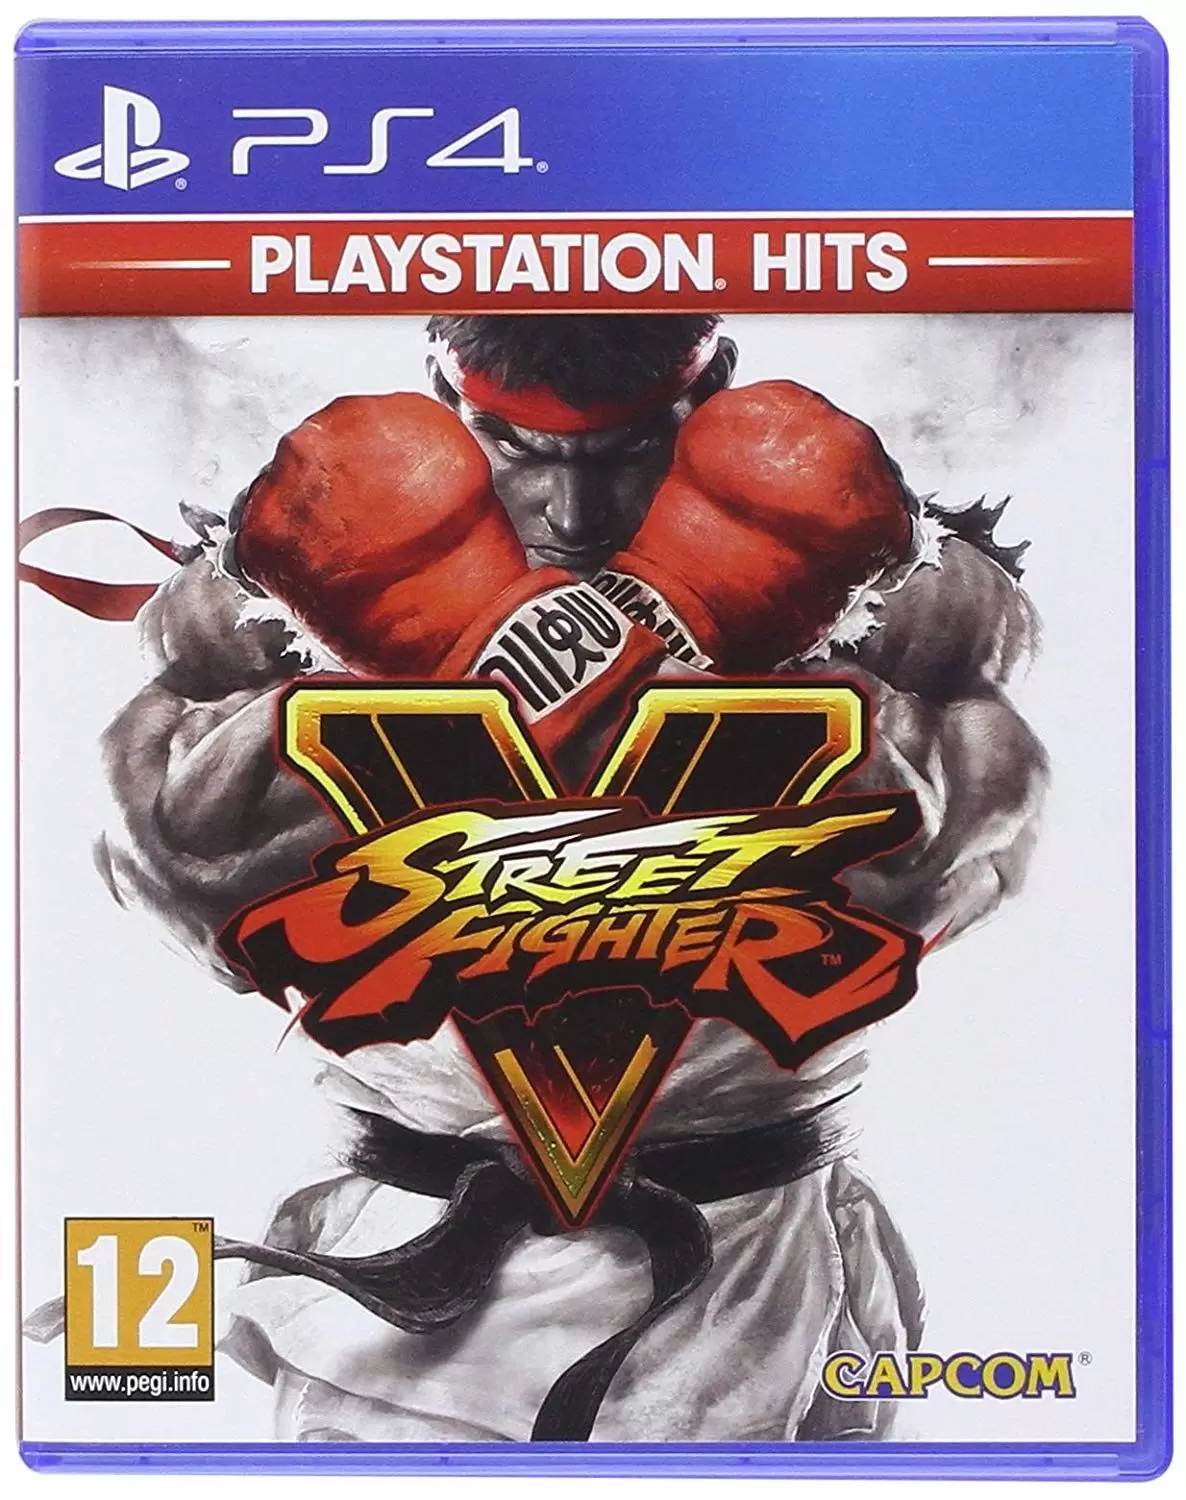 PS4 Games - Street Fighter V (Playstation Hits)